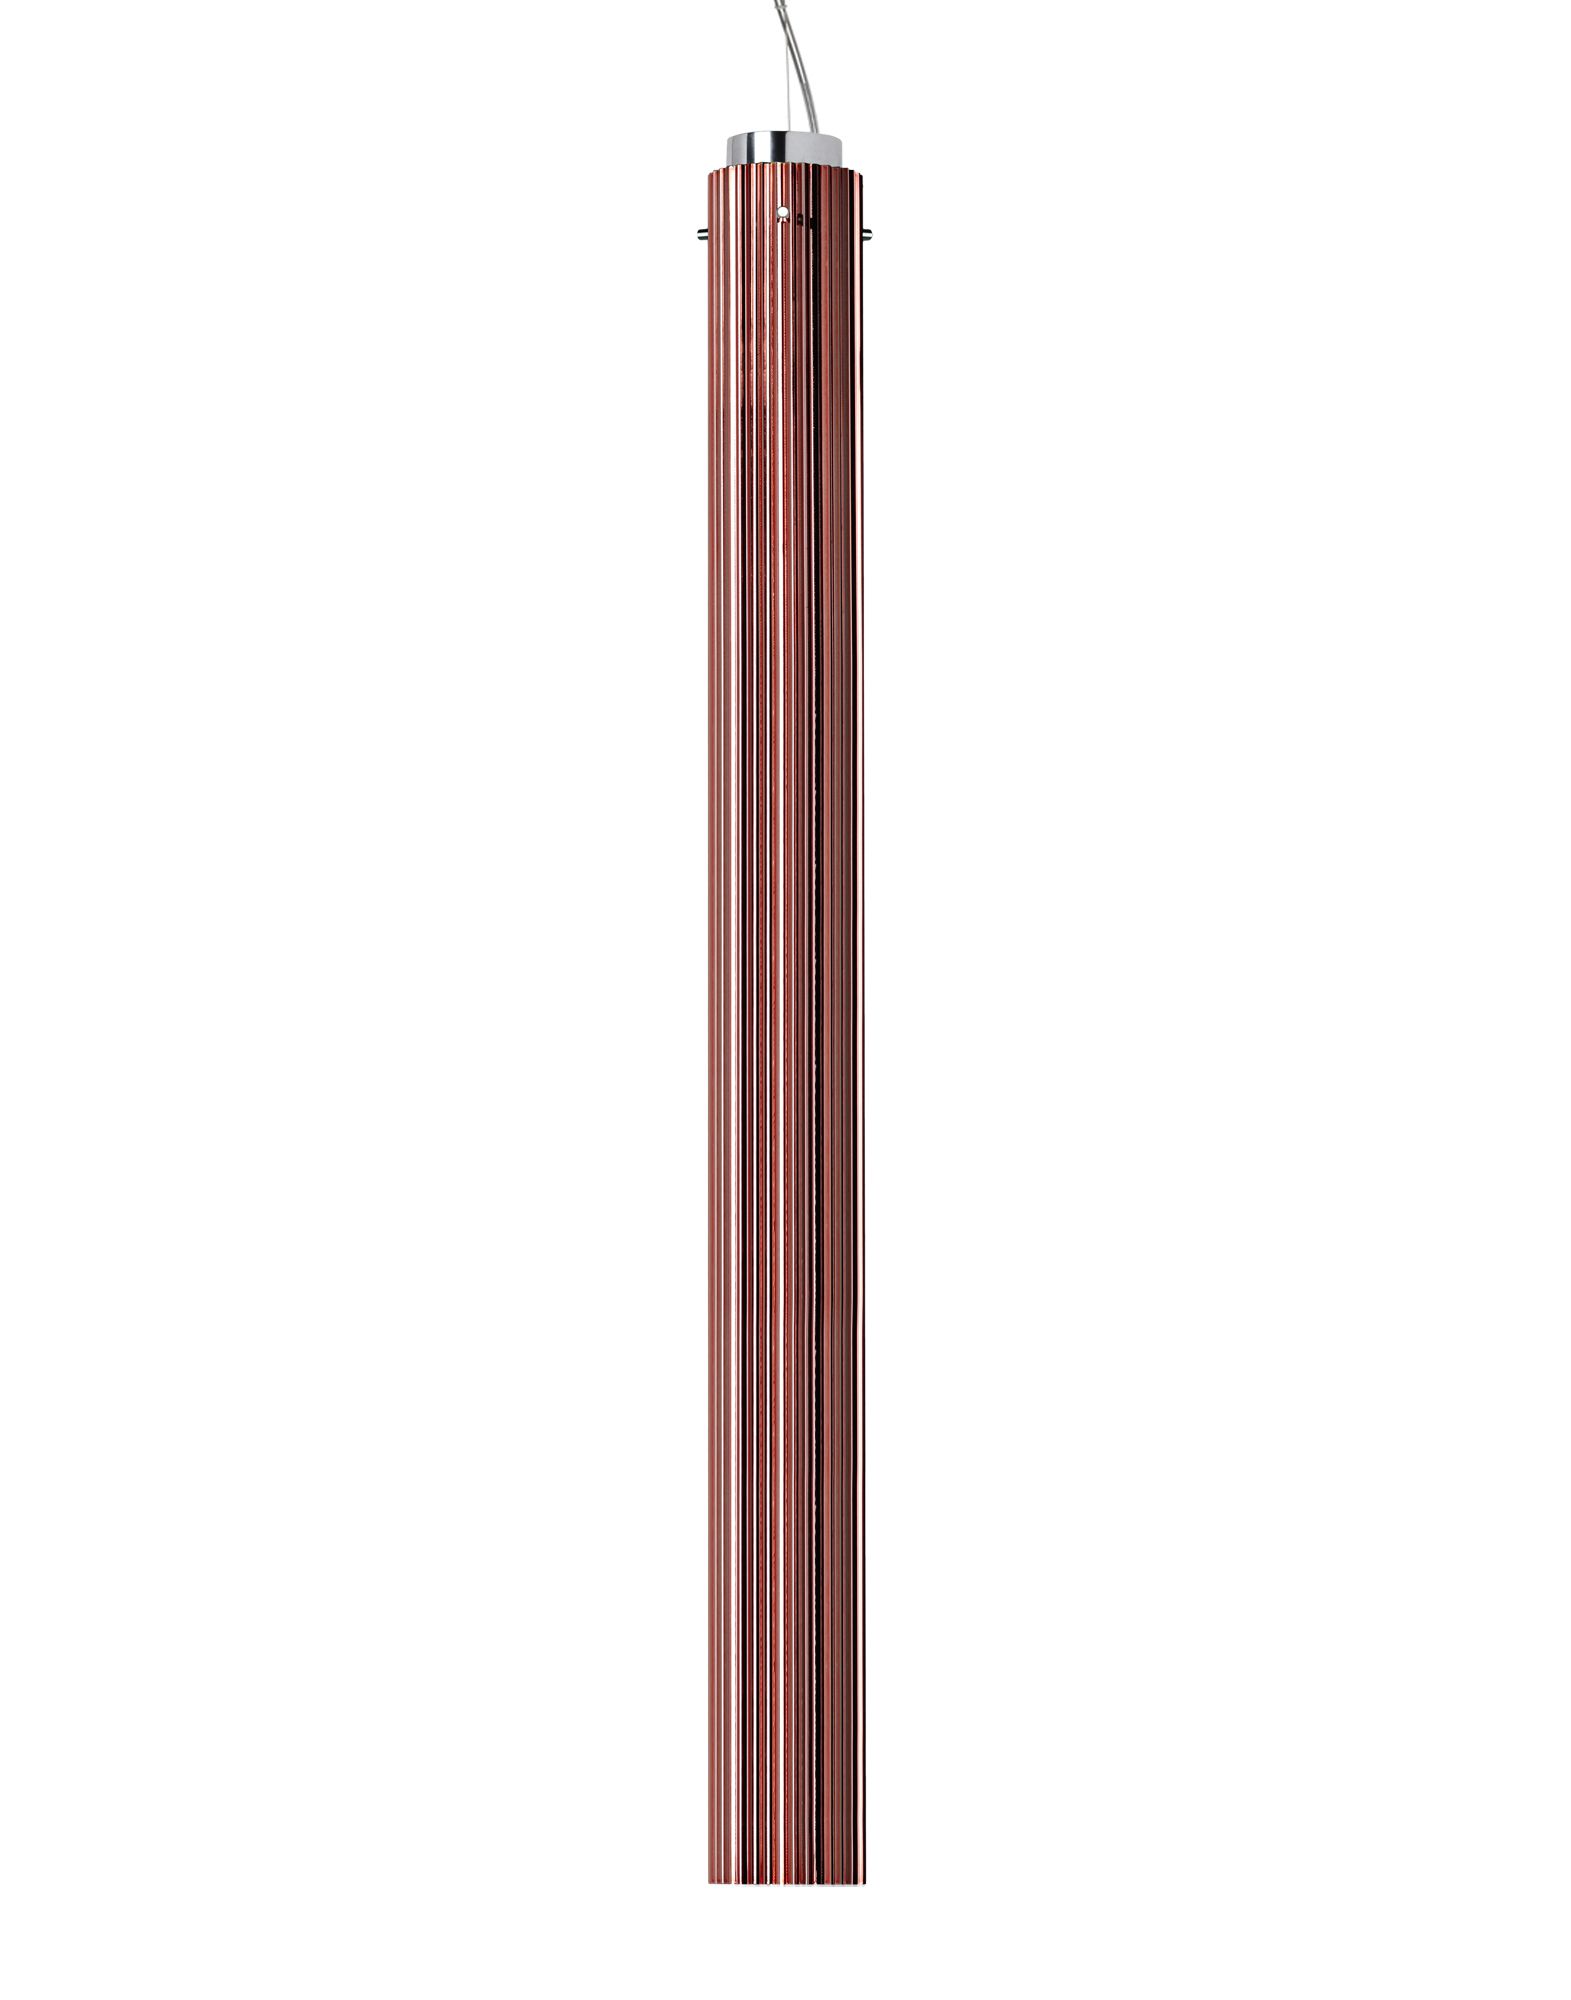 Suspensie Kartell by Laufen Rifly design Ludovica & Roberto Palomba LED 10W h90cm cupru metalizat Kartell by Laufen imagine reduss.ro 2022